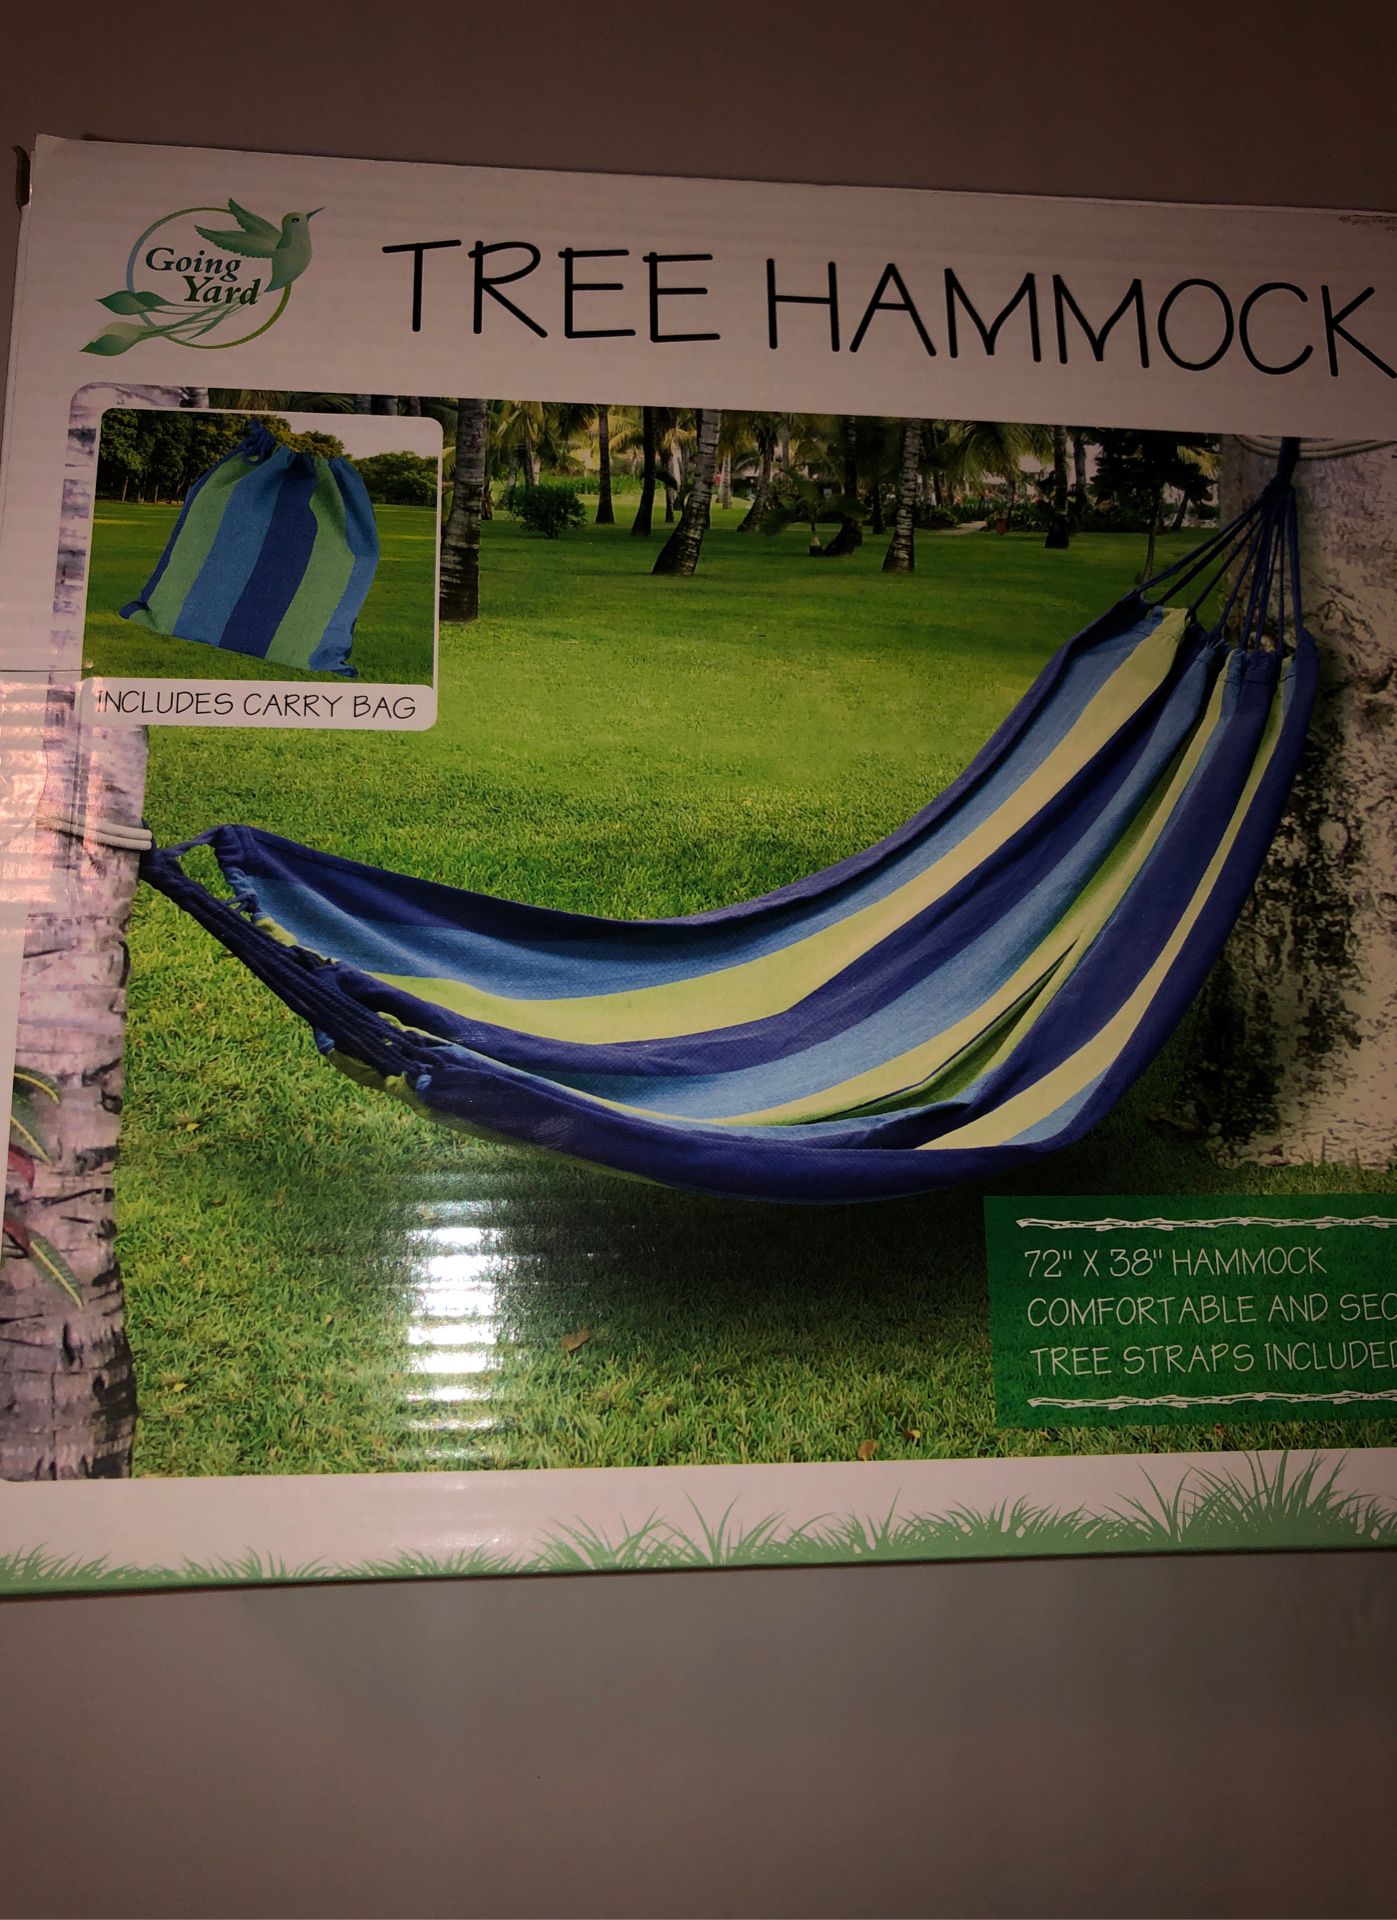 Goin yard tree hammock